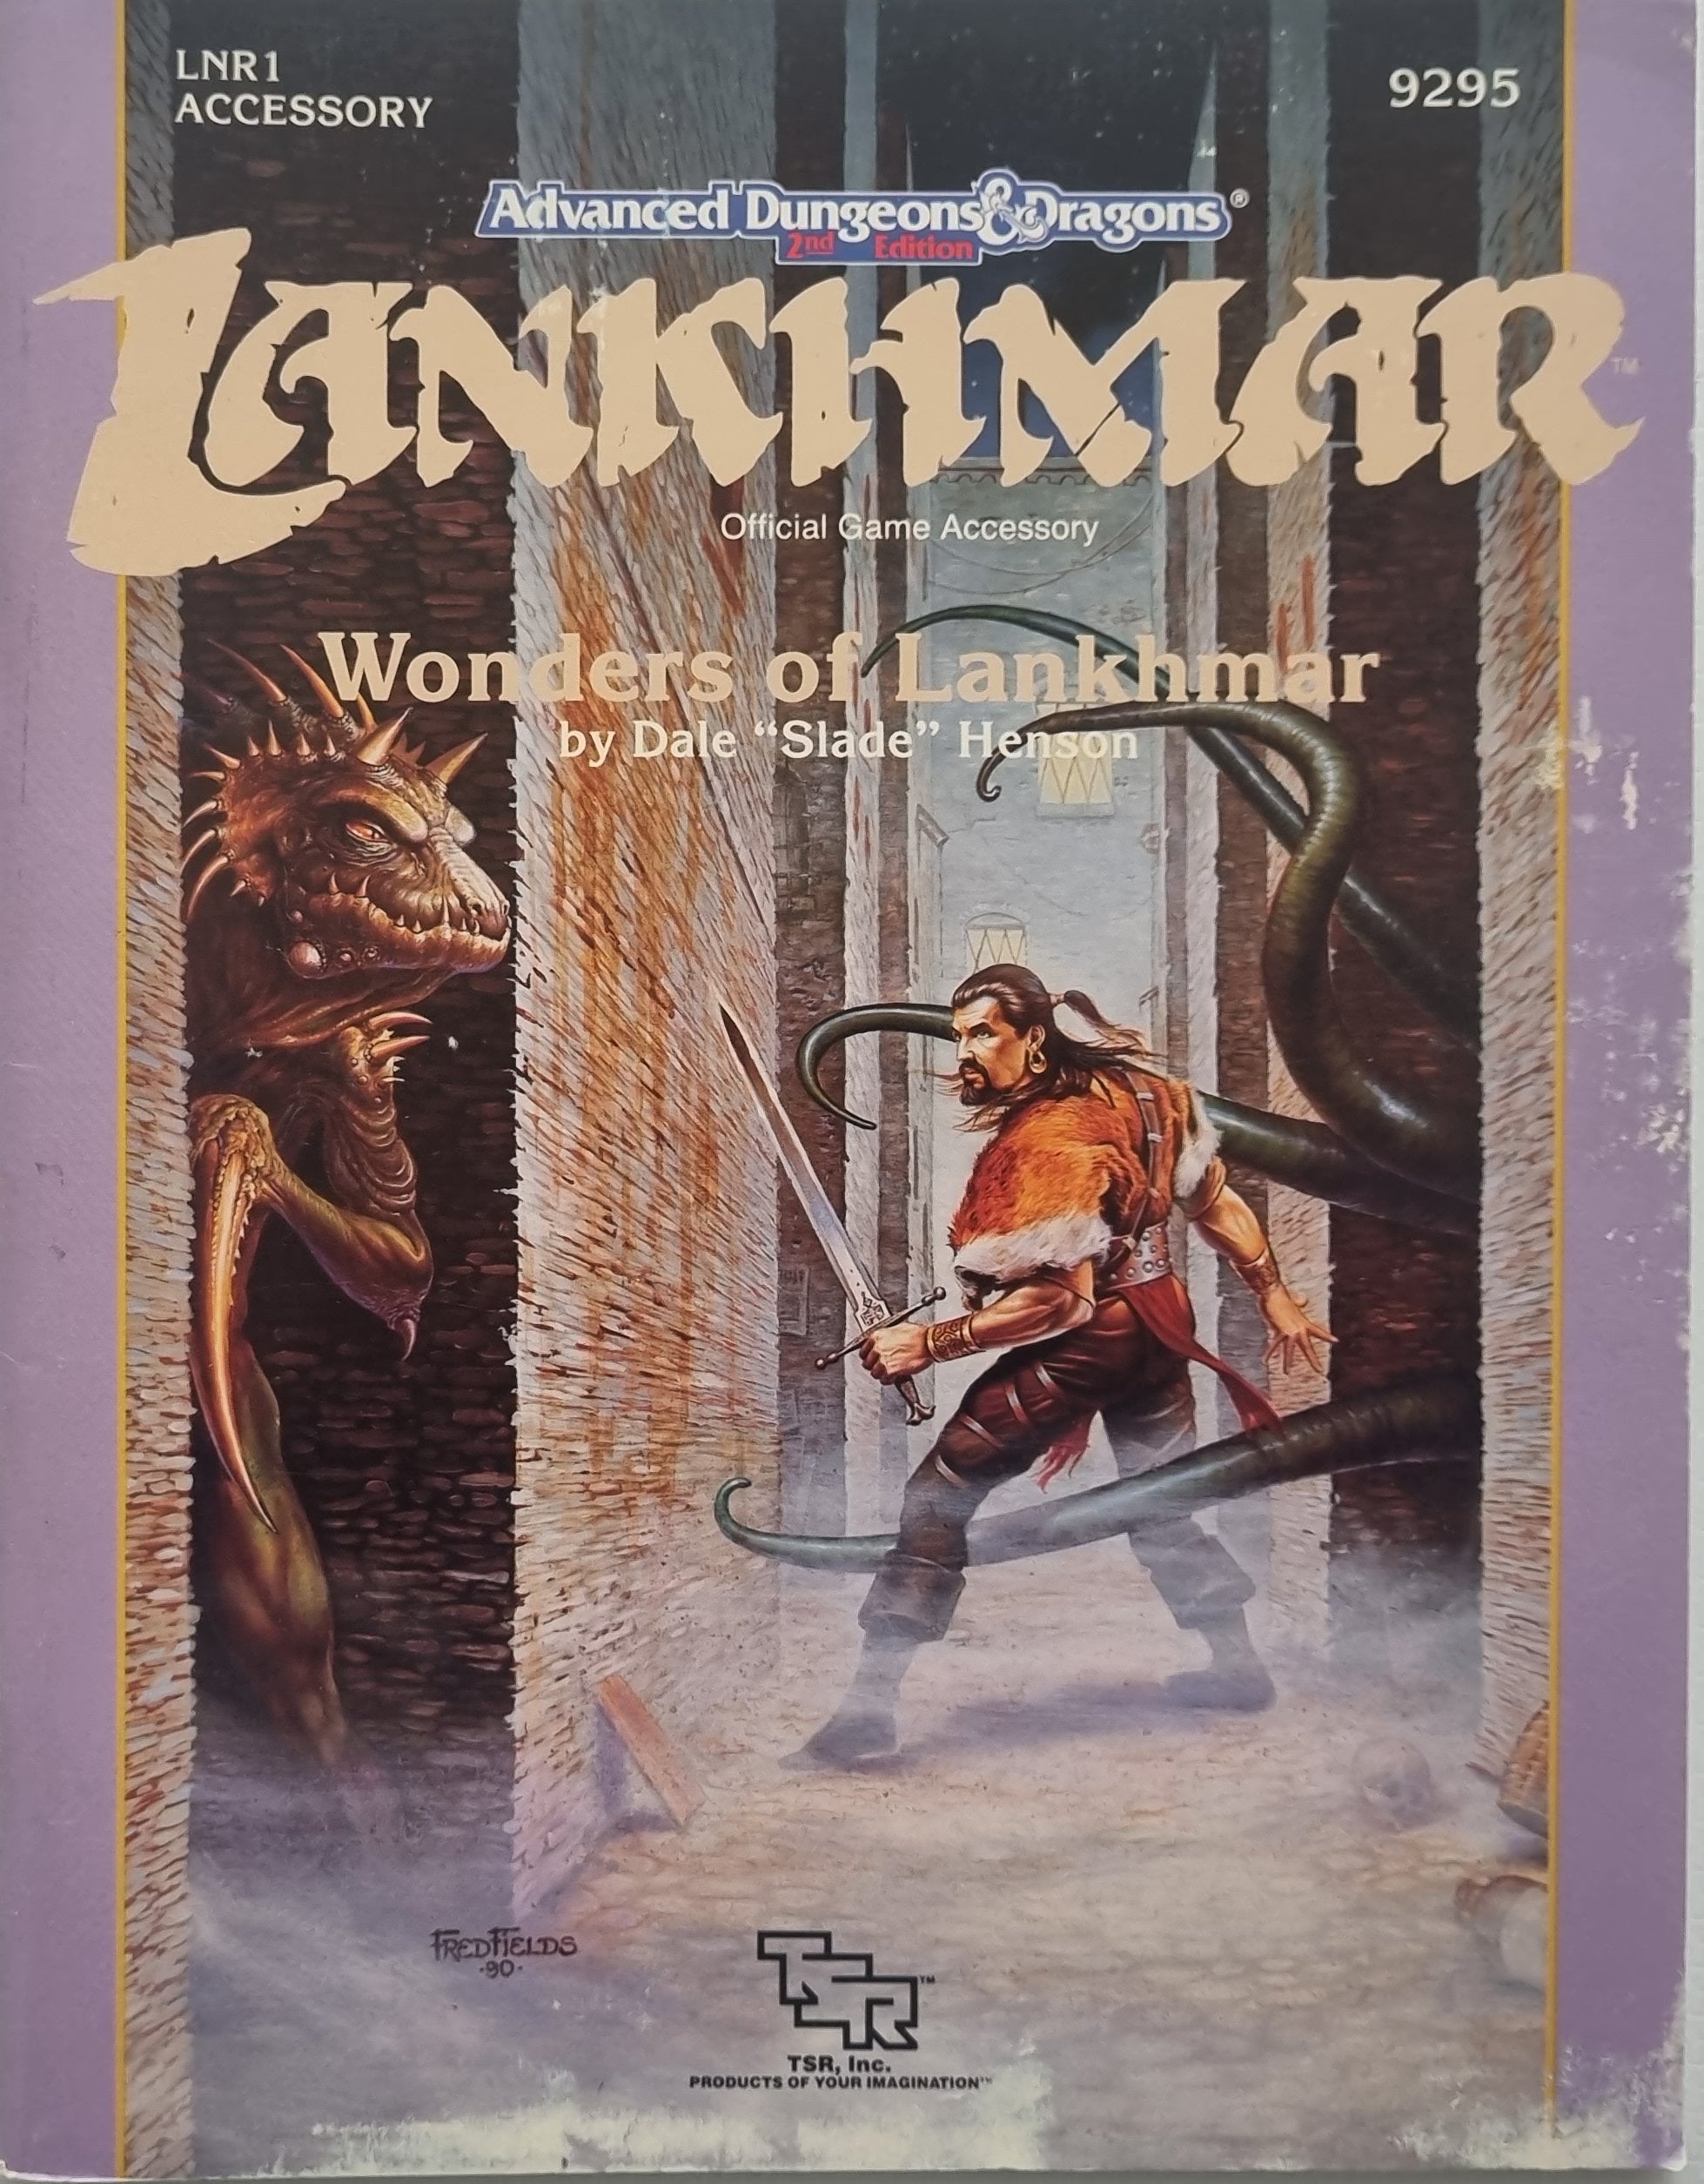 Advanced Dungeons & Dragons - Lankhmar: Wonders of Lankhmar